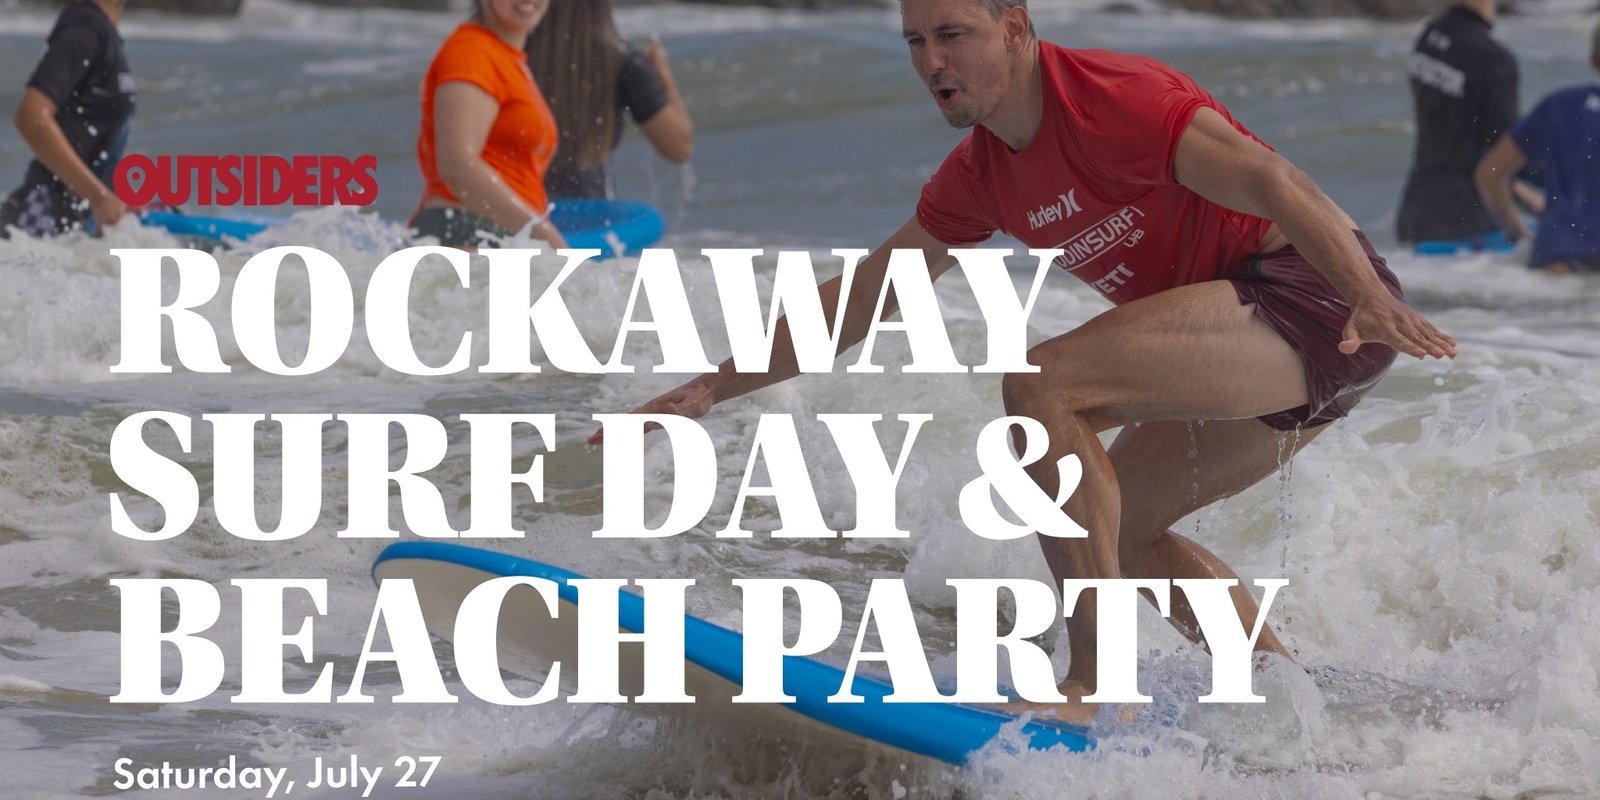 Banner image for Rockaway Surf Day